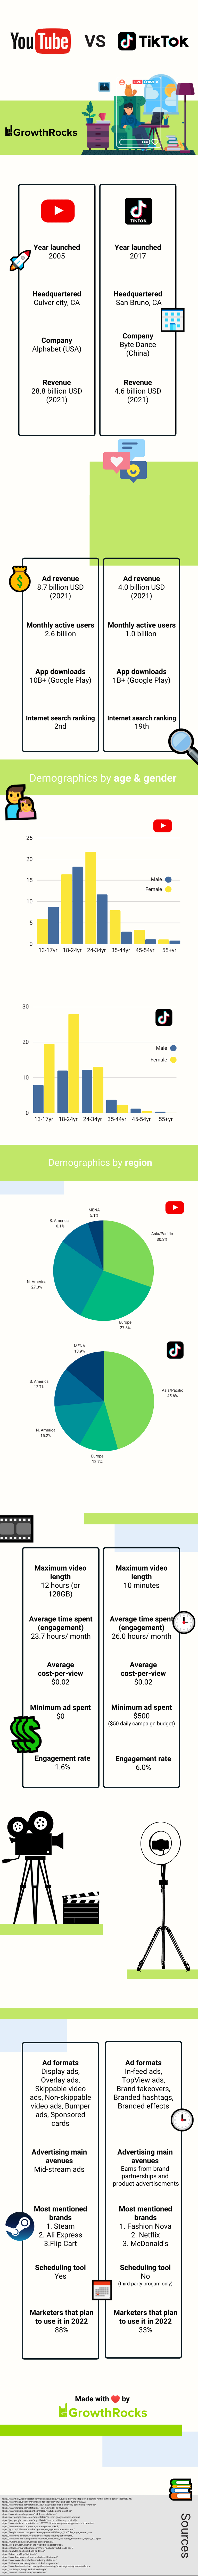 TikTok vs YouTube infographic